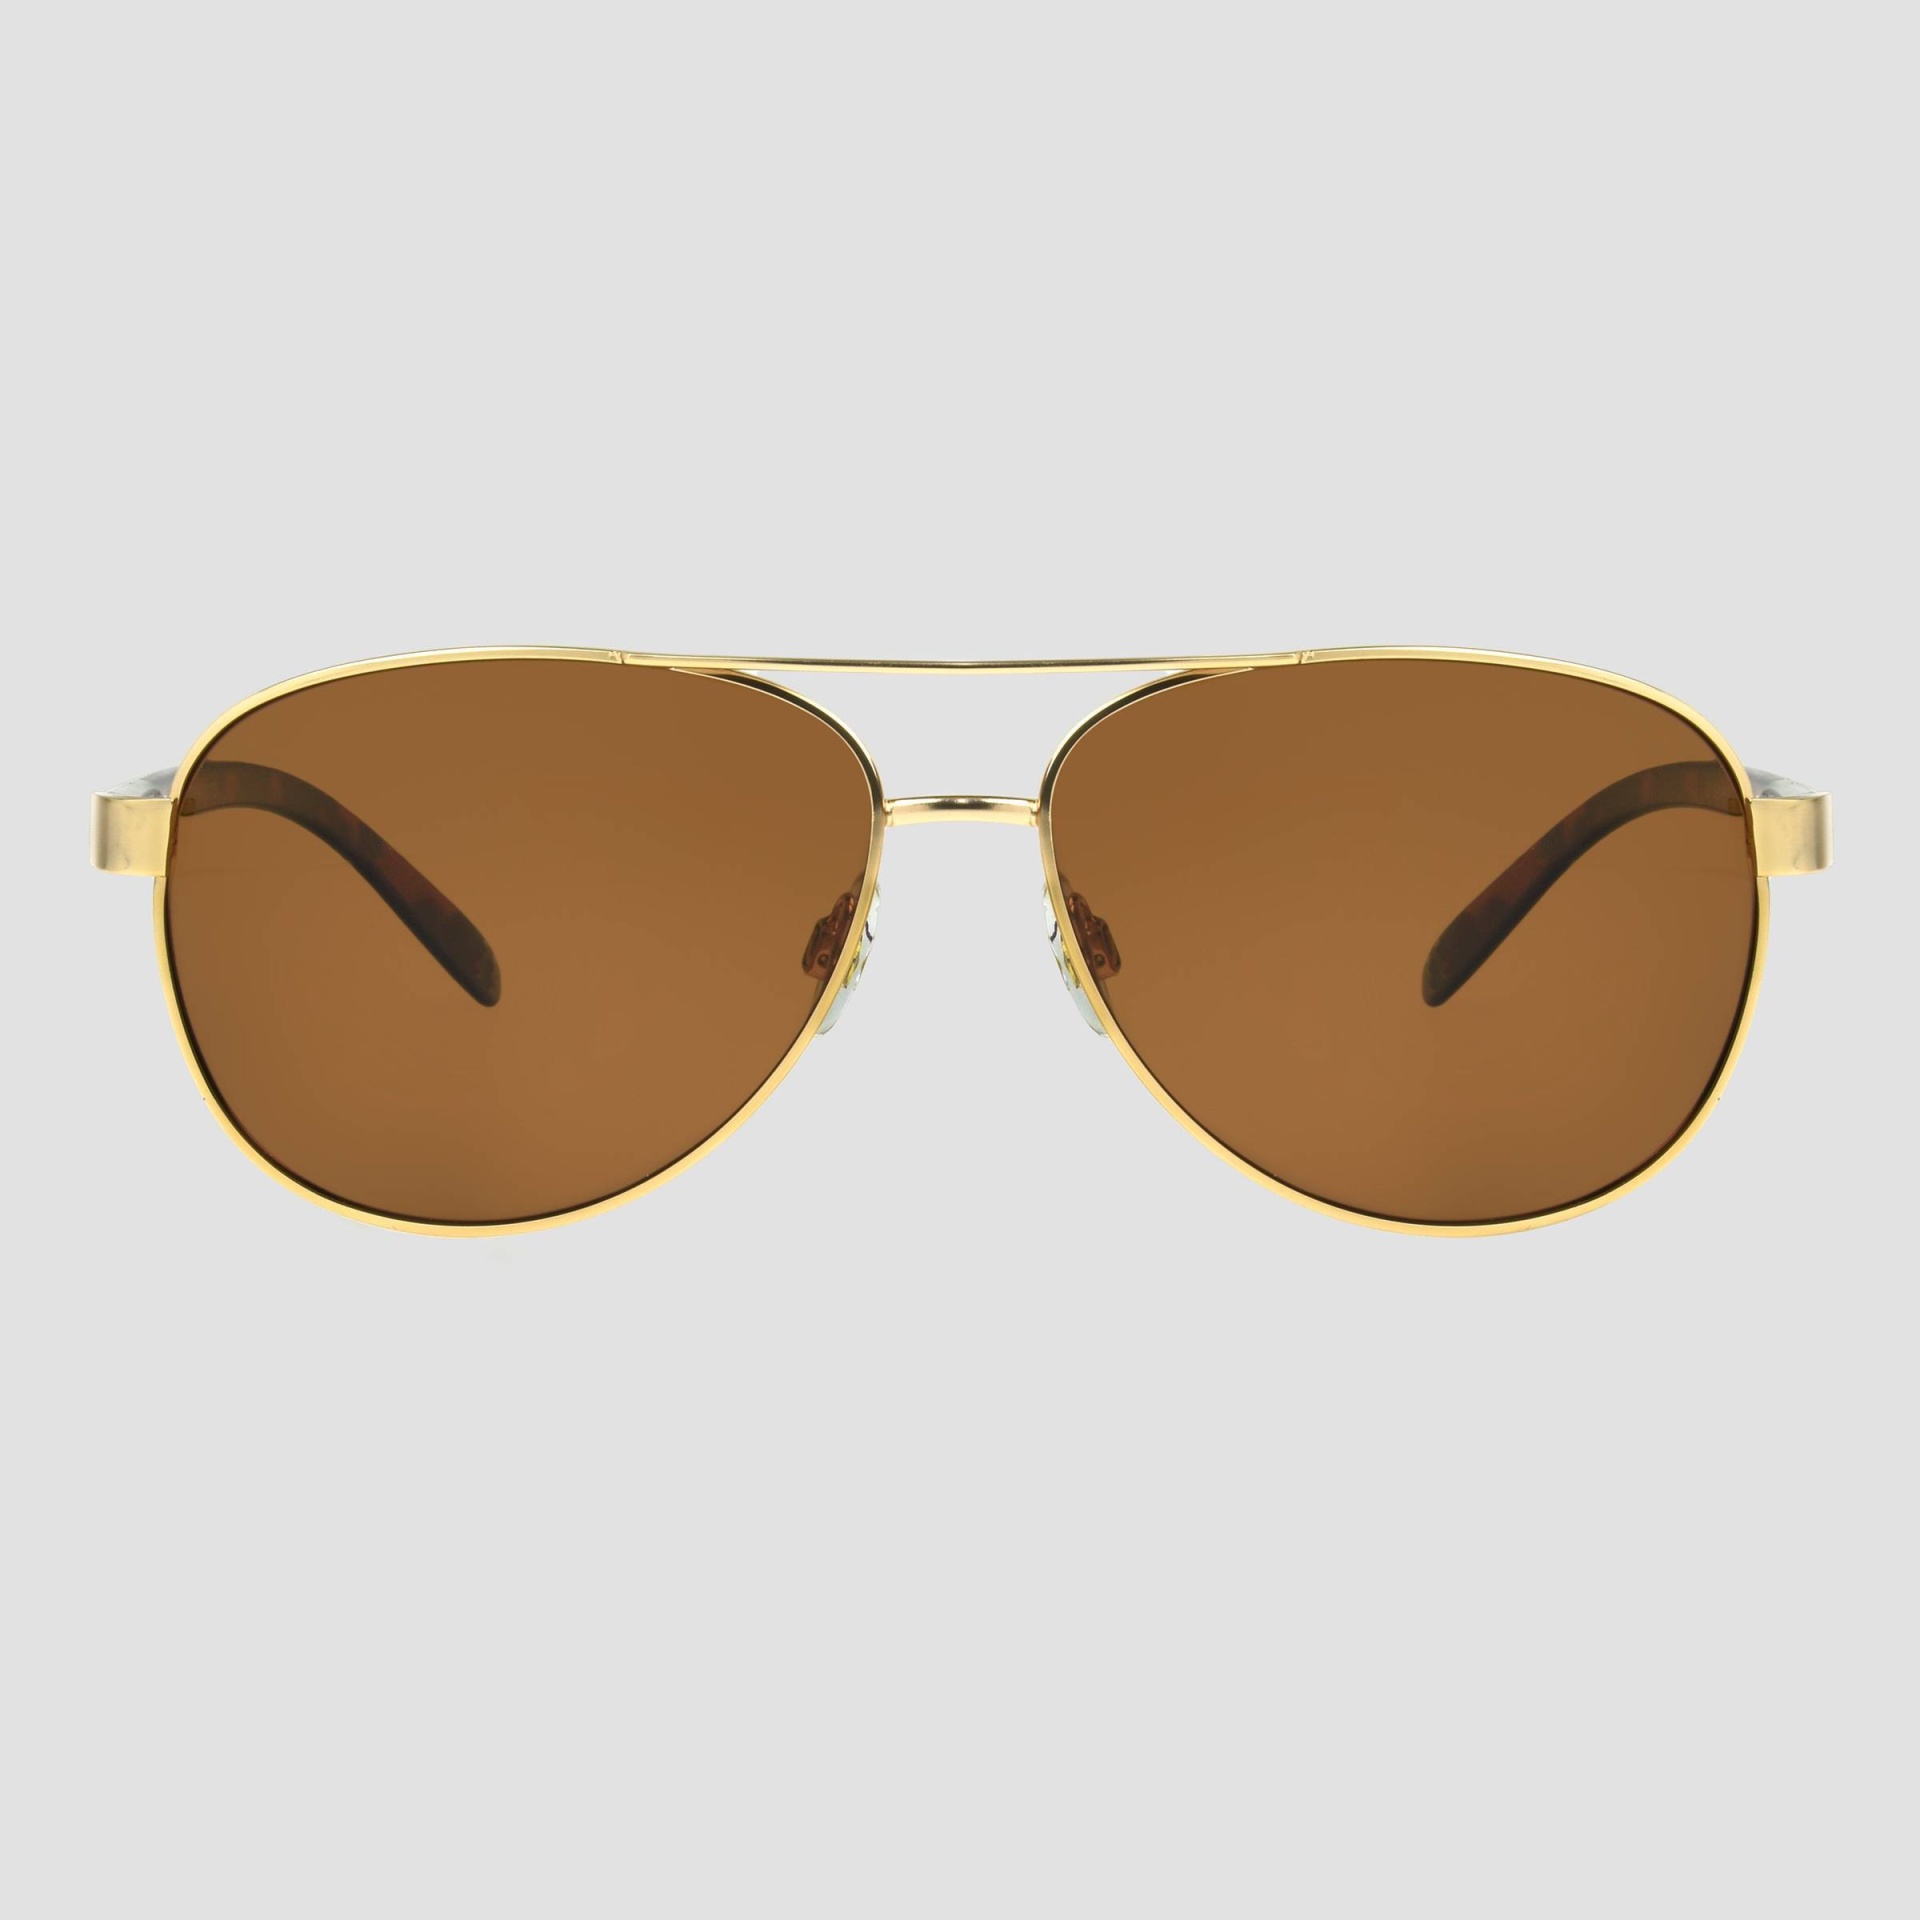 slide 1 of 2, Women's Tortoise Shell Aviator Sunglasses with Polarized Lenses - A New Day Gold, 1 ct